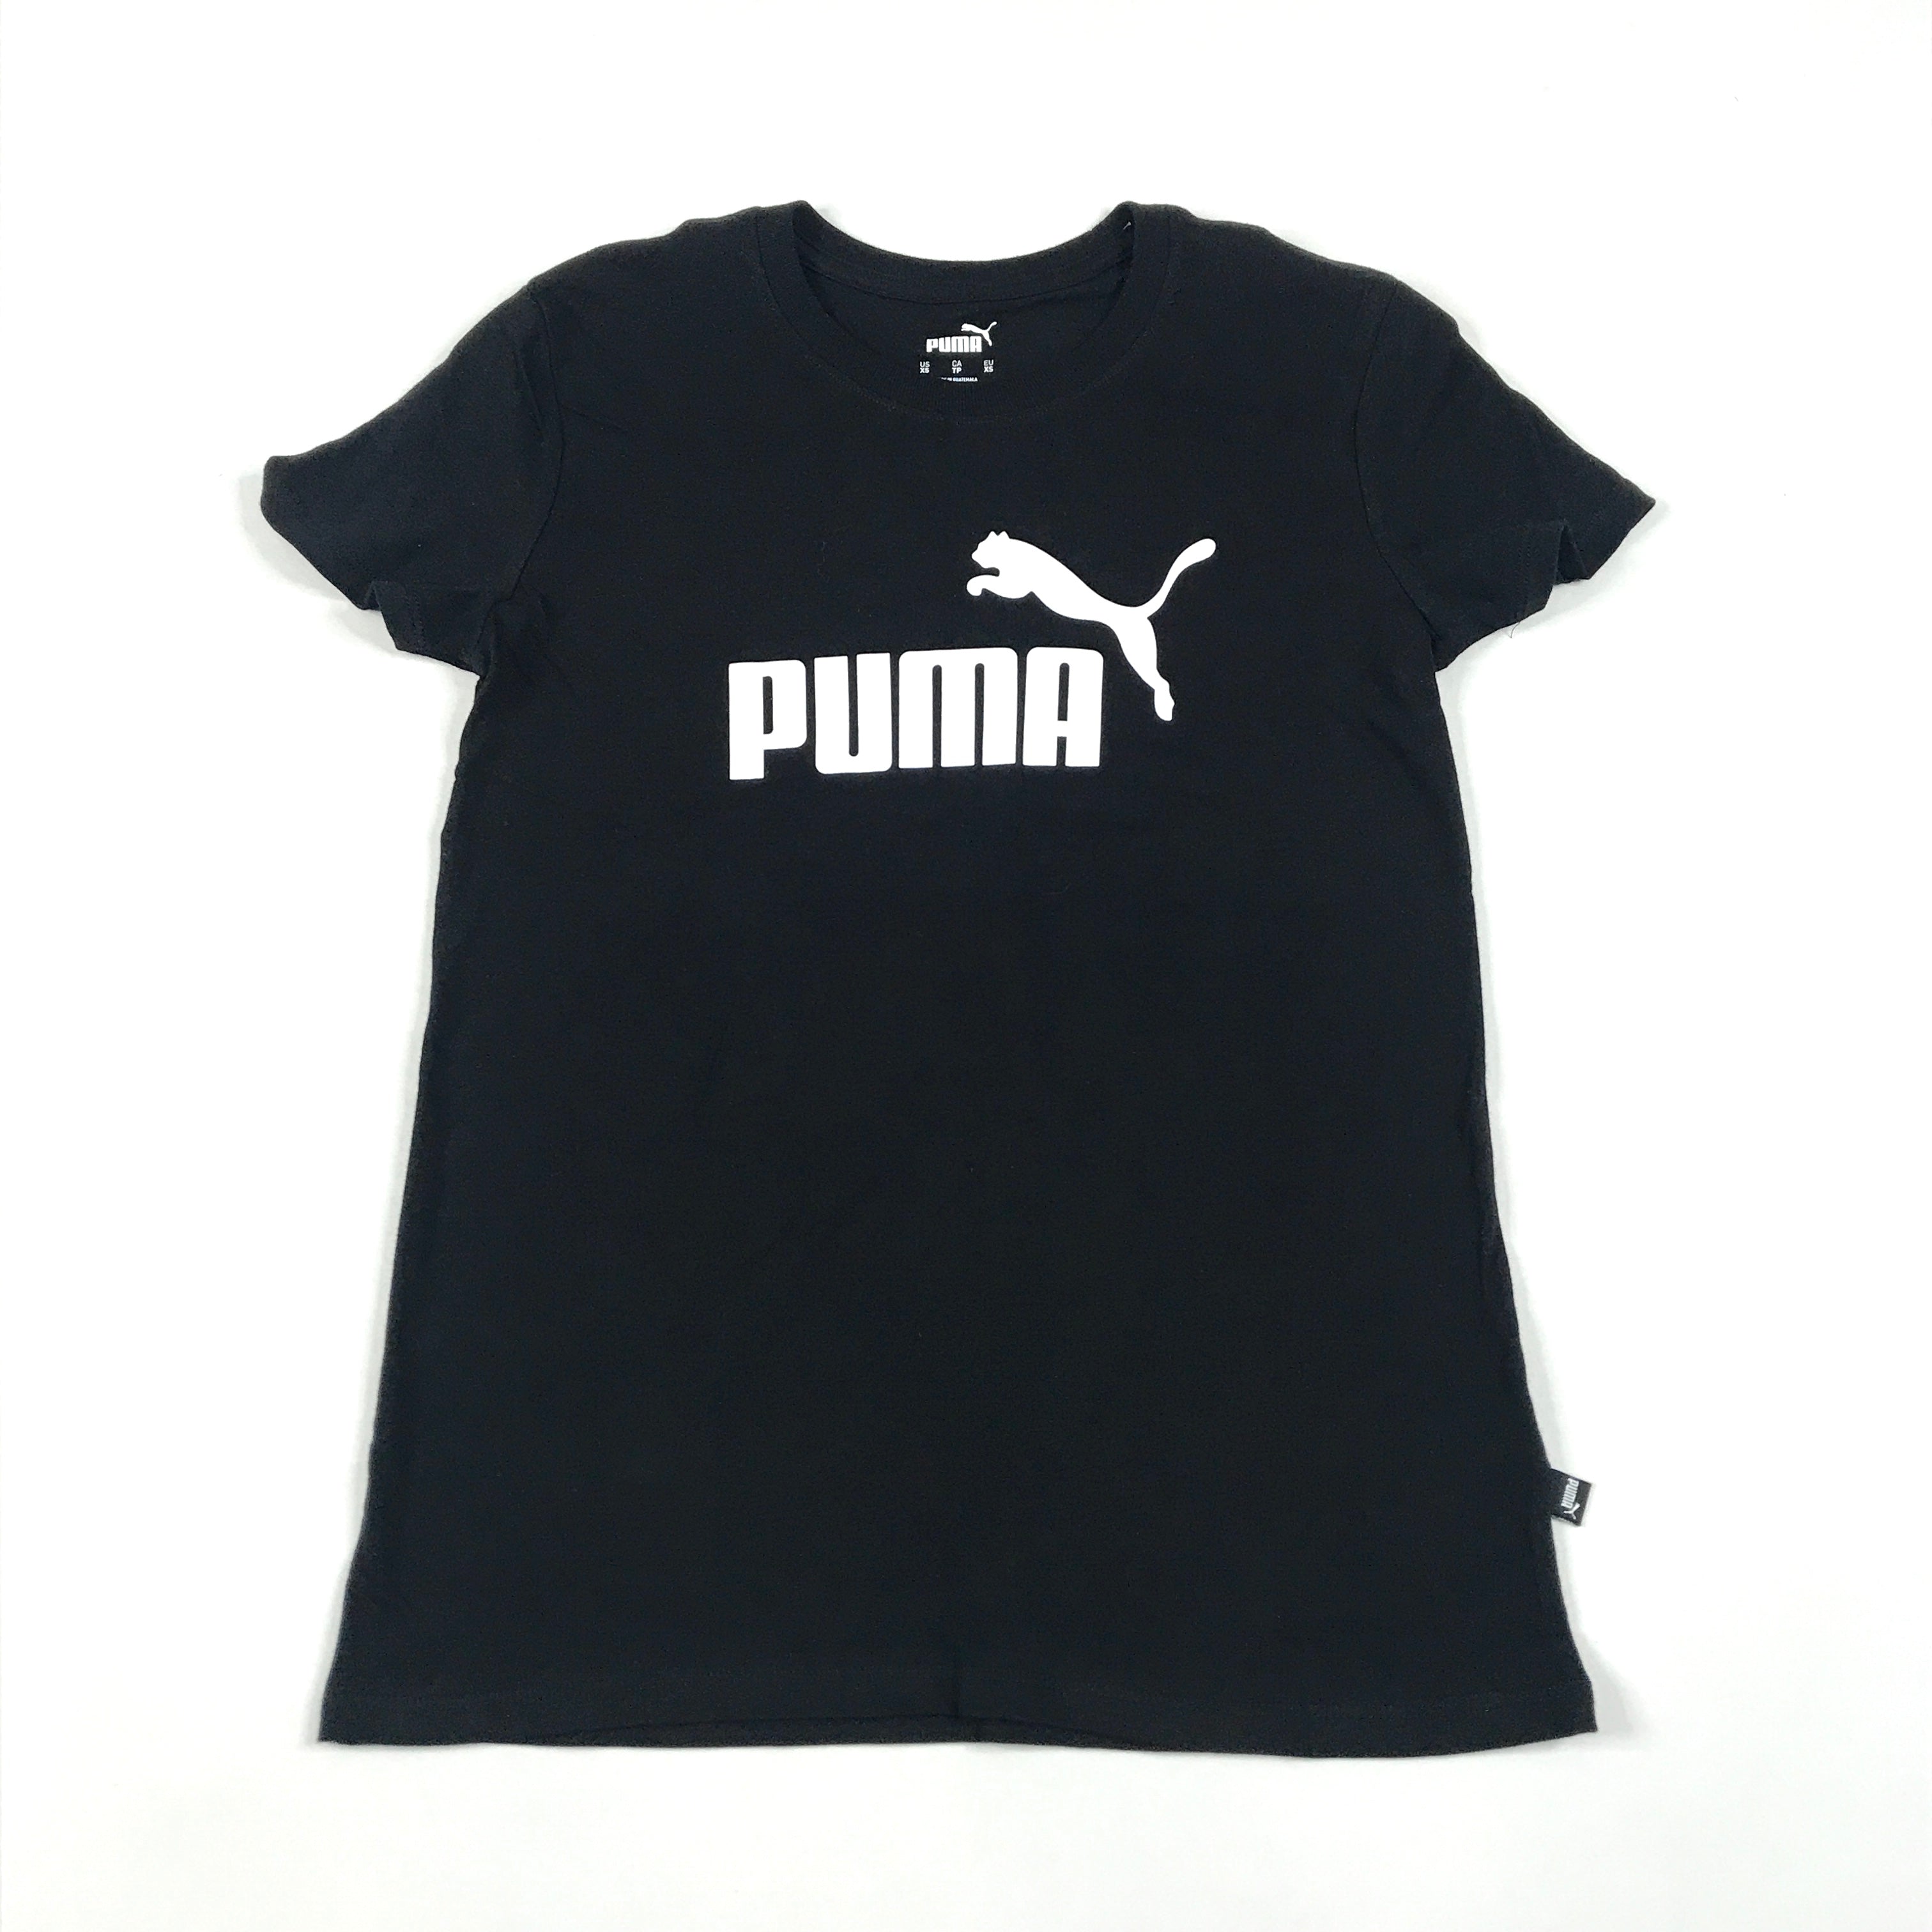 Puma ESS logo tee in black